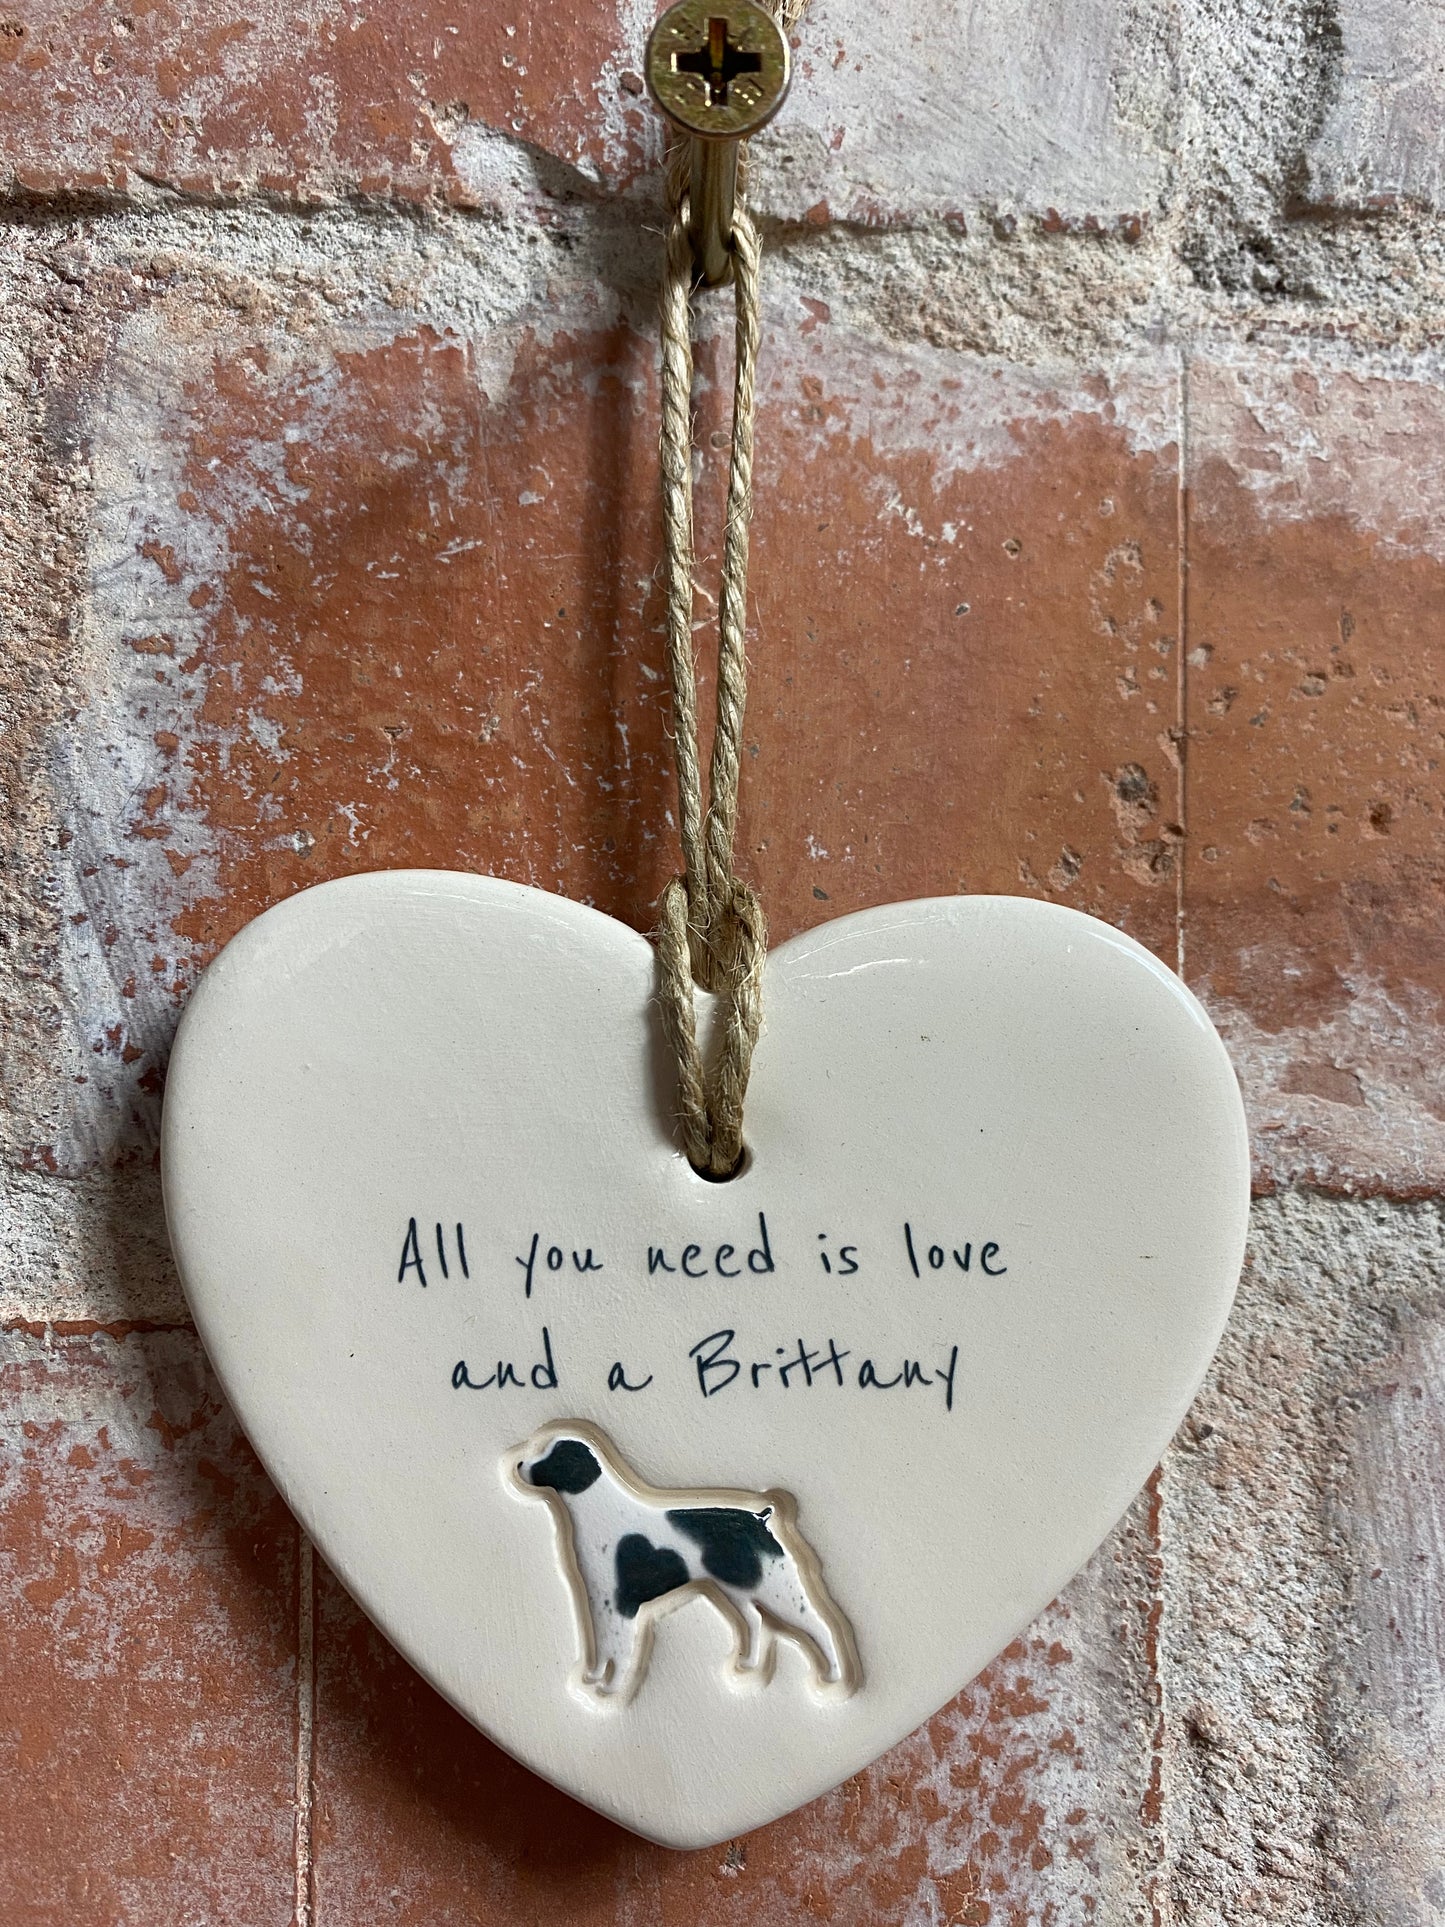 Brittany ceramic heart